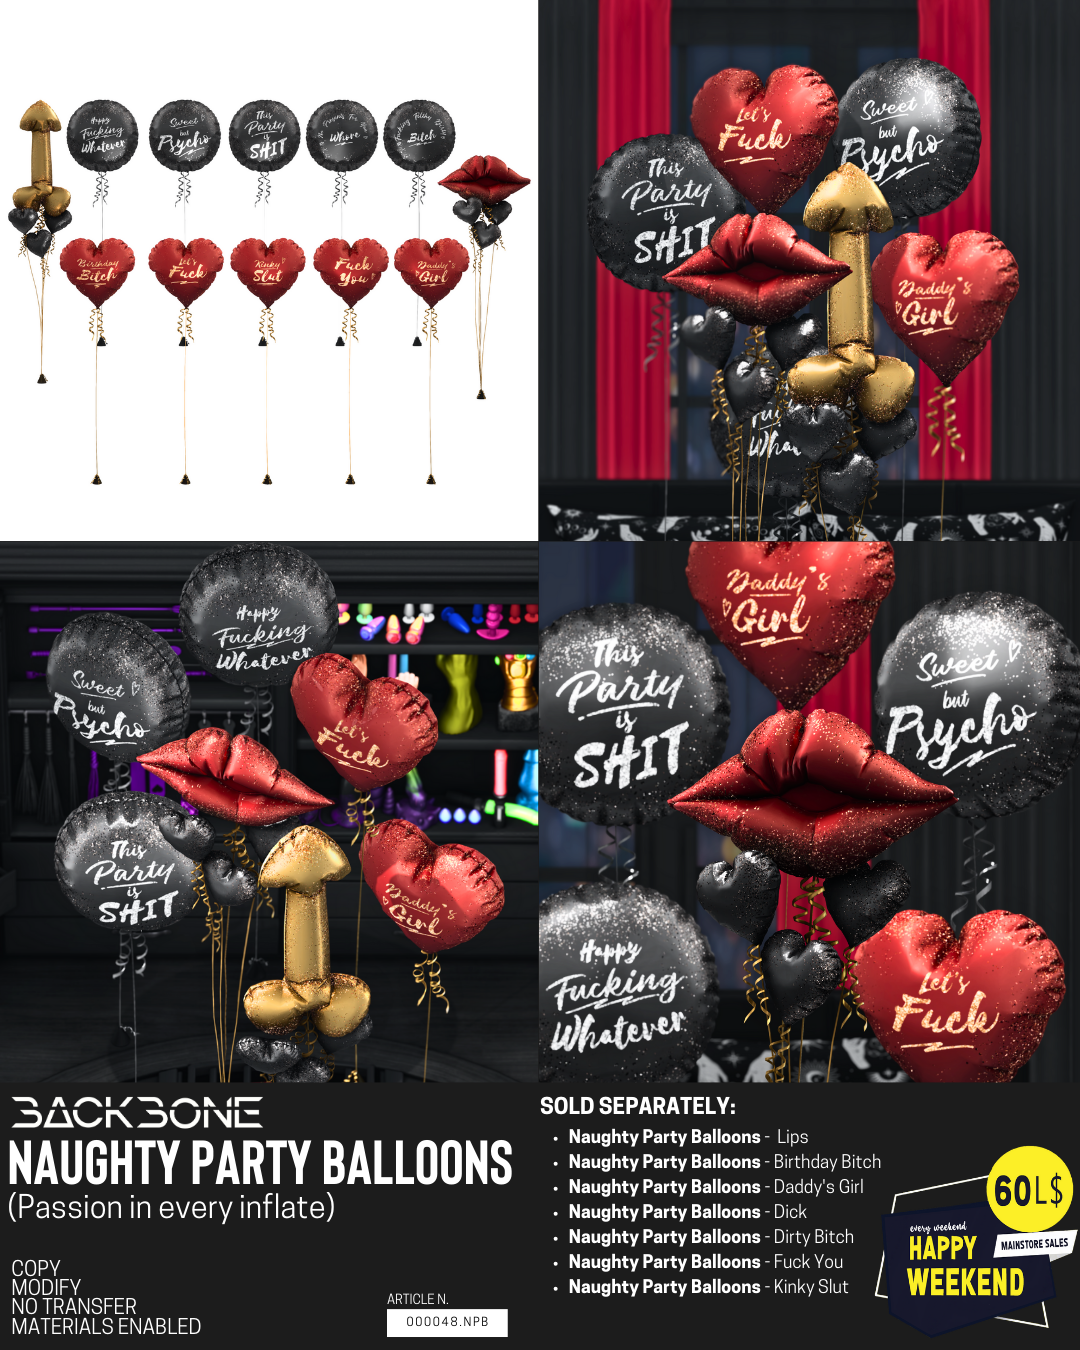 BackBone – Naughty Party Balloons